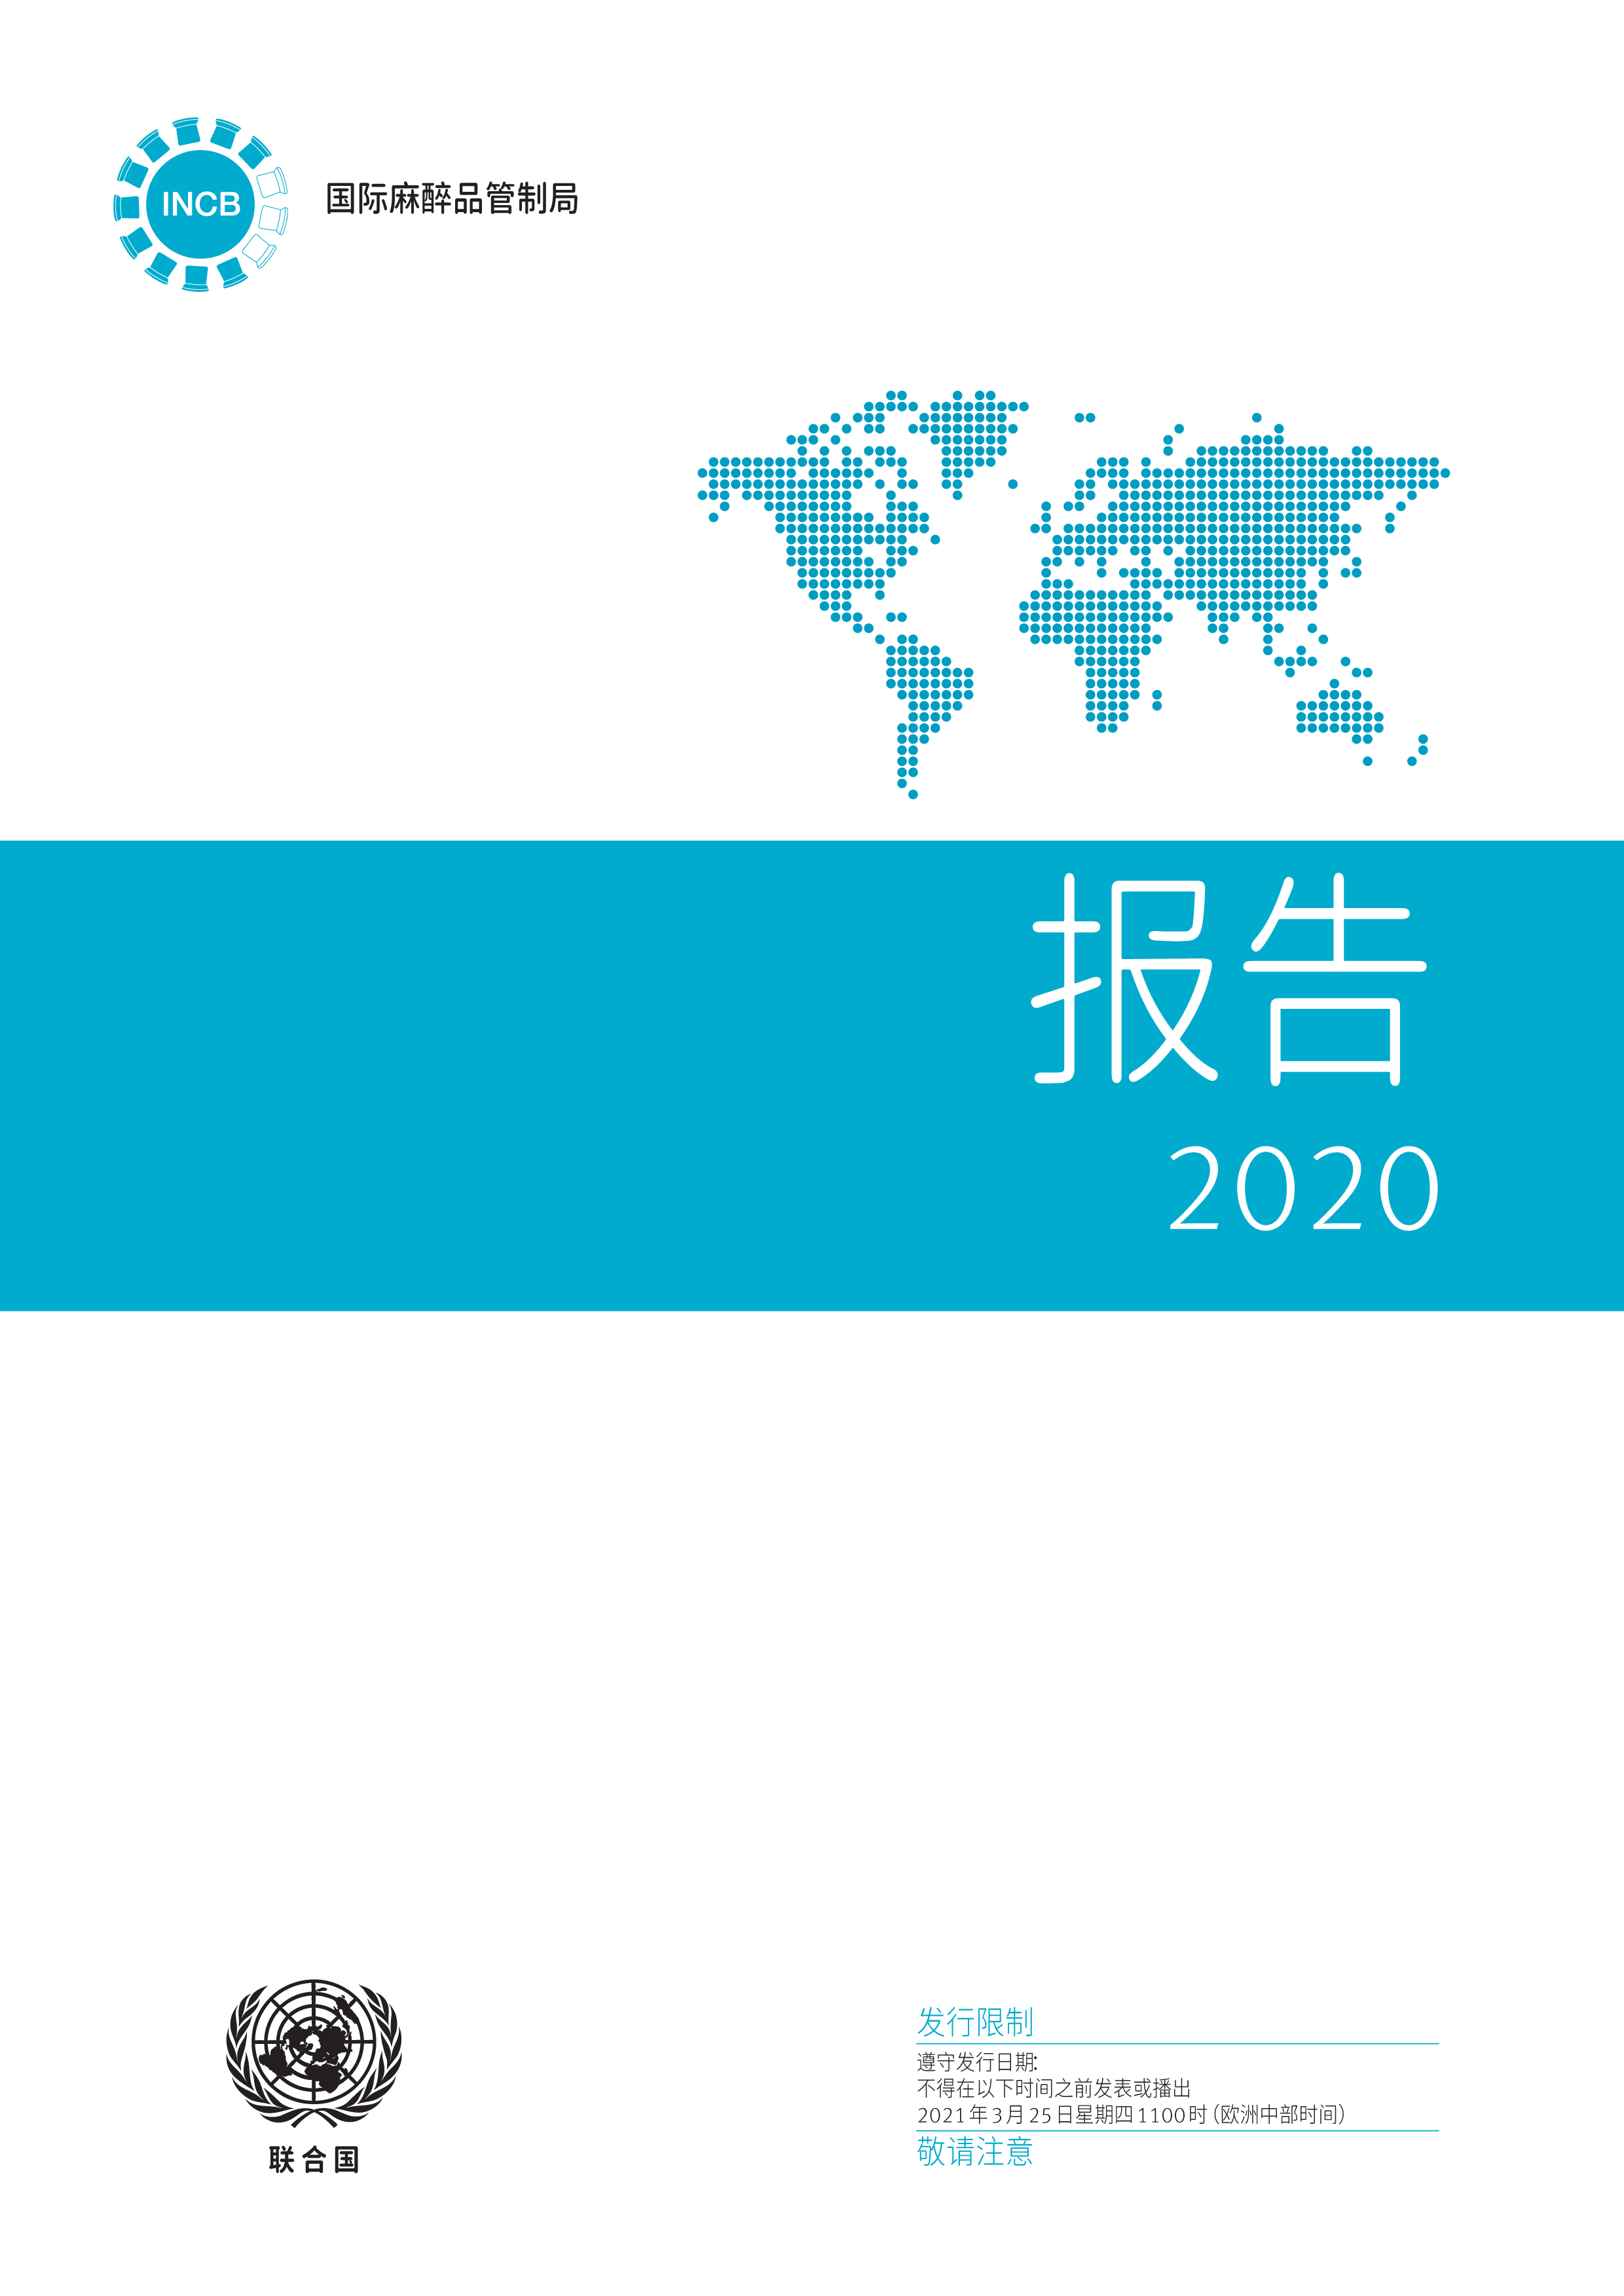 image of 2020 年国际麻醉品管制局报告